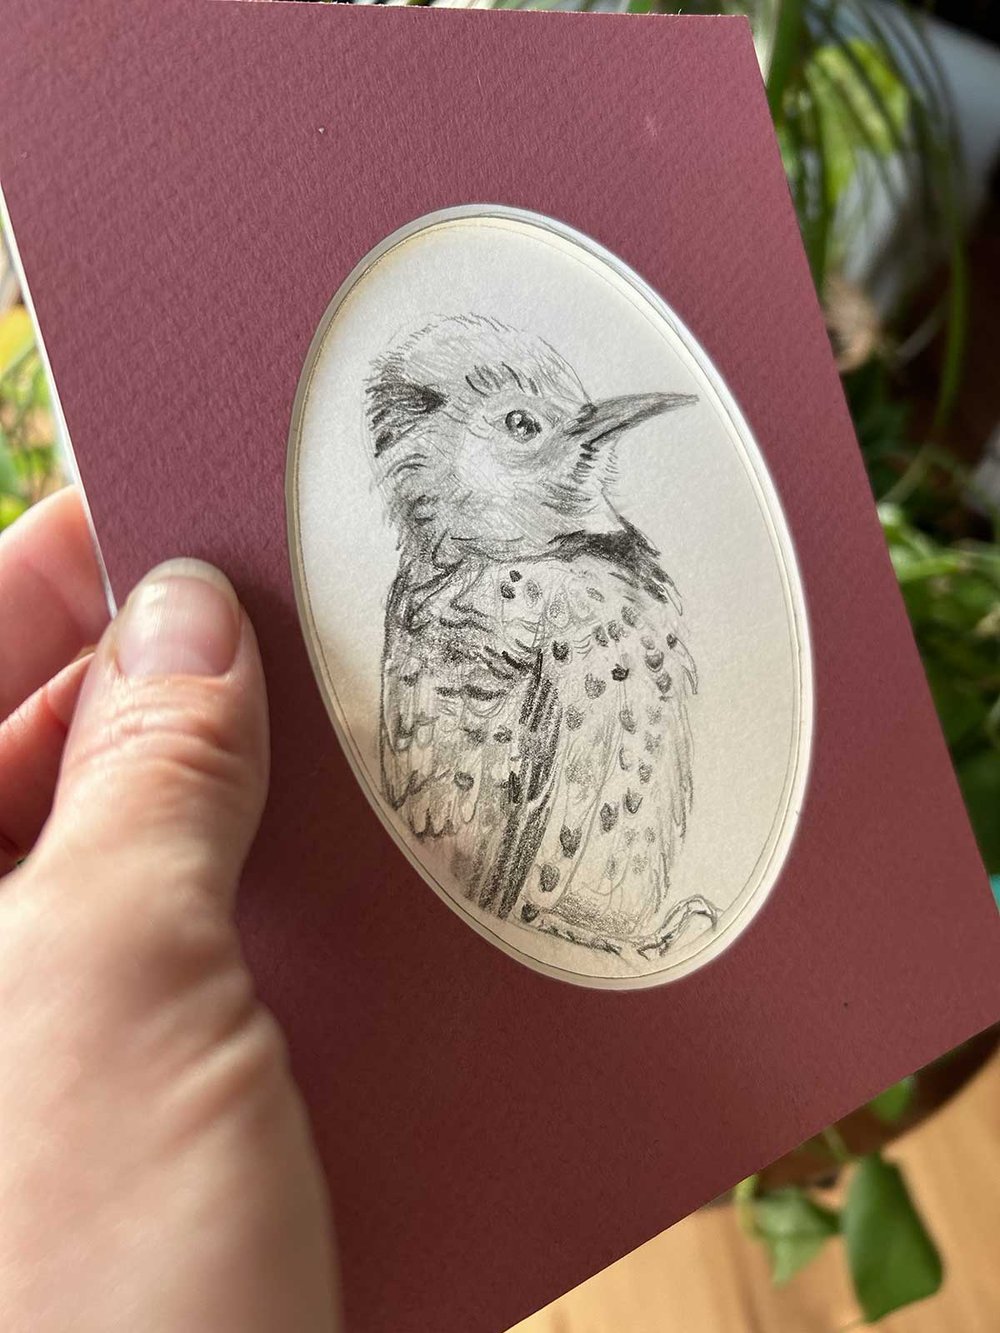 Colaptes auratus – Northern flicker bird drawing